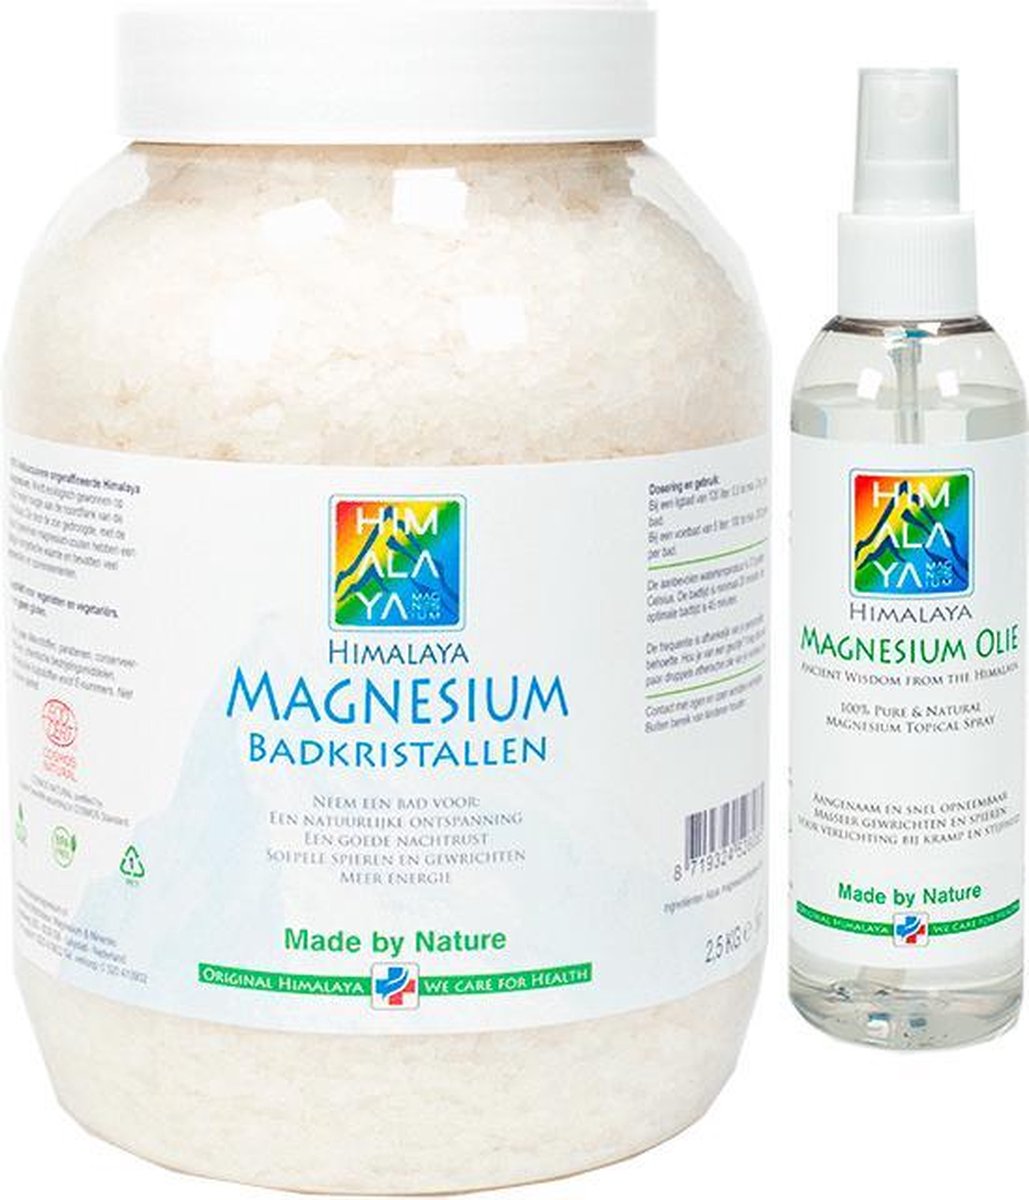 Magnesiumolie spray 200 ml en Magnesium vlokken-badkristallen 2,5 kg van Himalaya magnesium | Food kwaliteit |Magnesiumchloride voor spieren